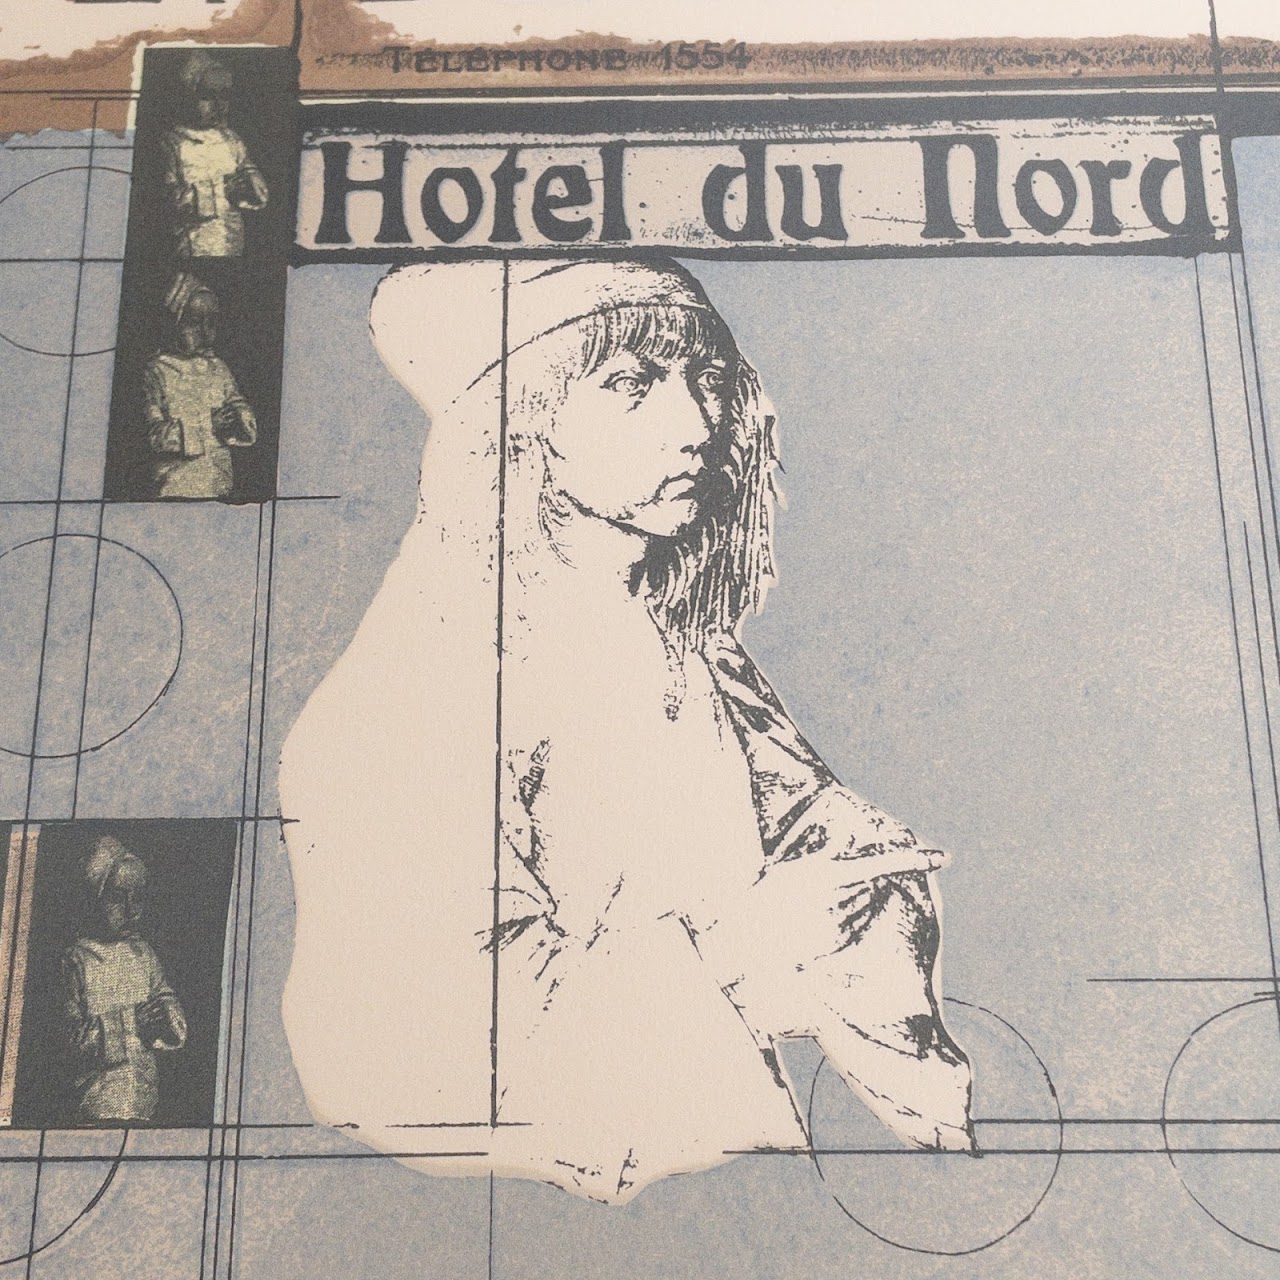 Joseph Cornell SIGNED "Hotel du Nord" Lithograph